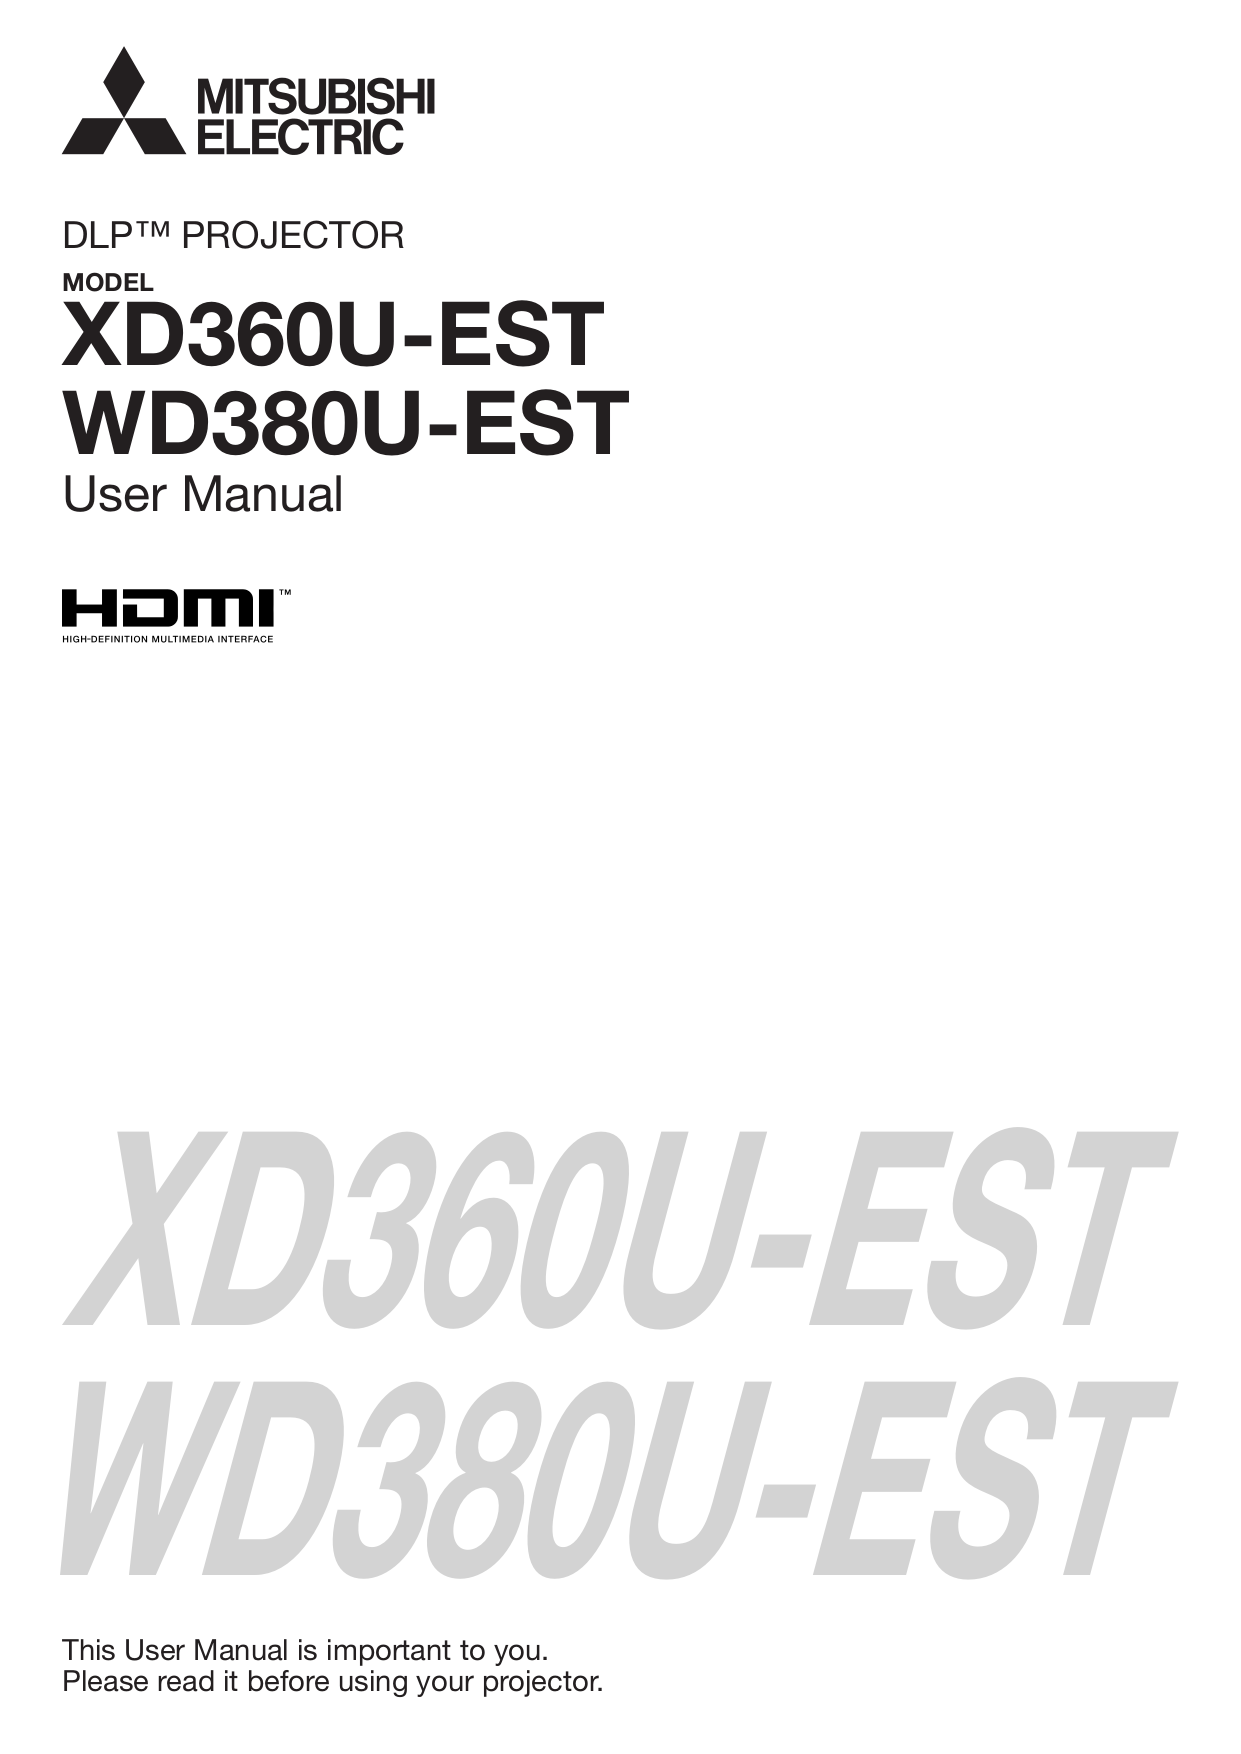 Download free pdf for Mitsubishi WD380U-EST Projector manual